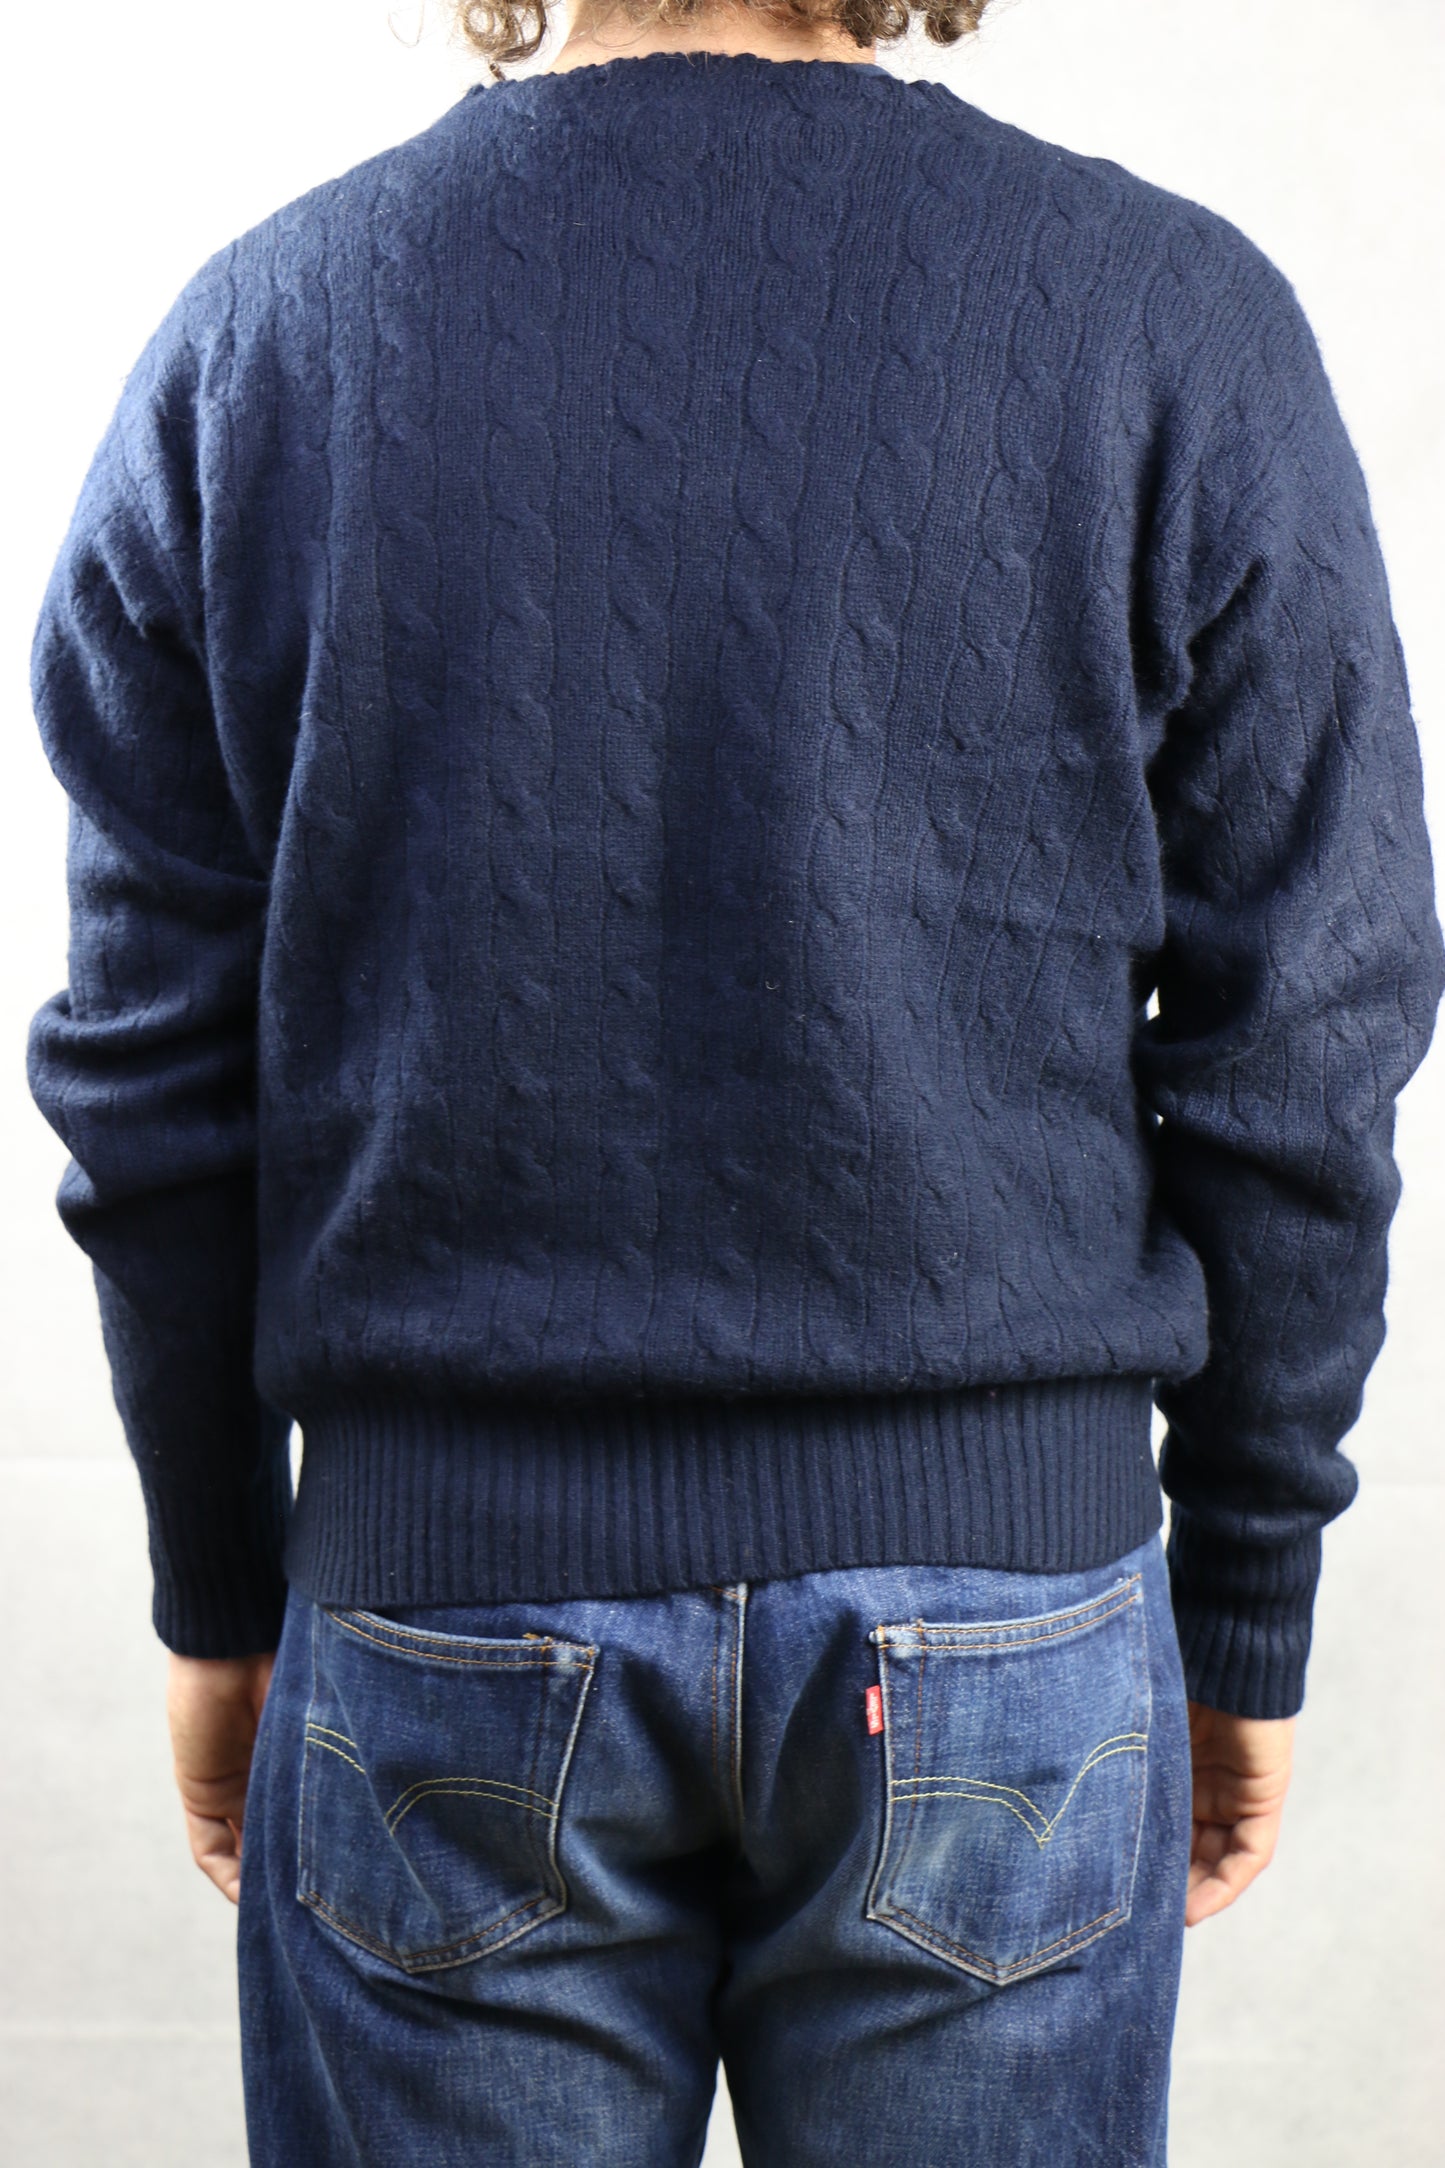 Polo Ralph Lauren Cashmere Sweater - vintage clothing clochard92.com